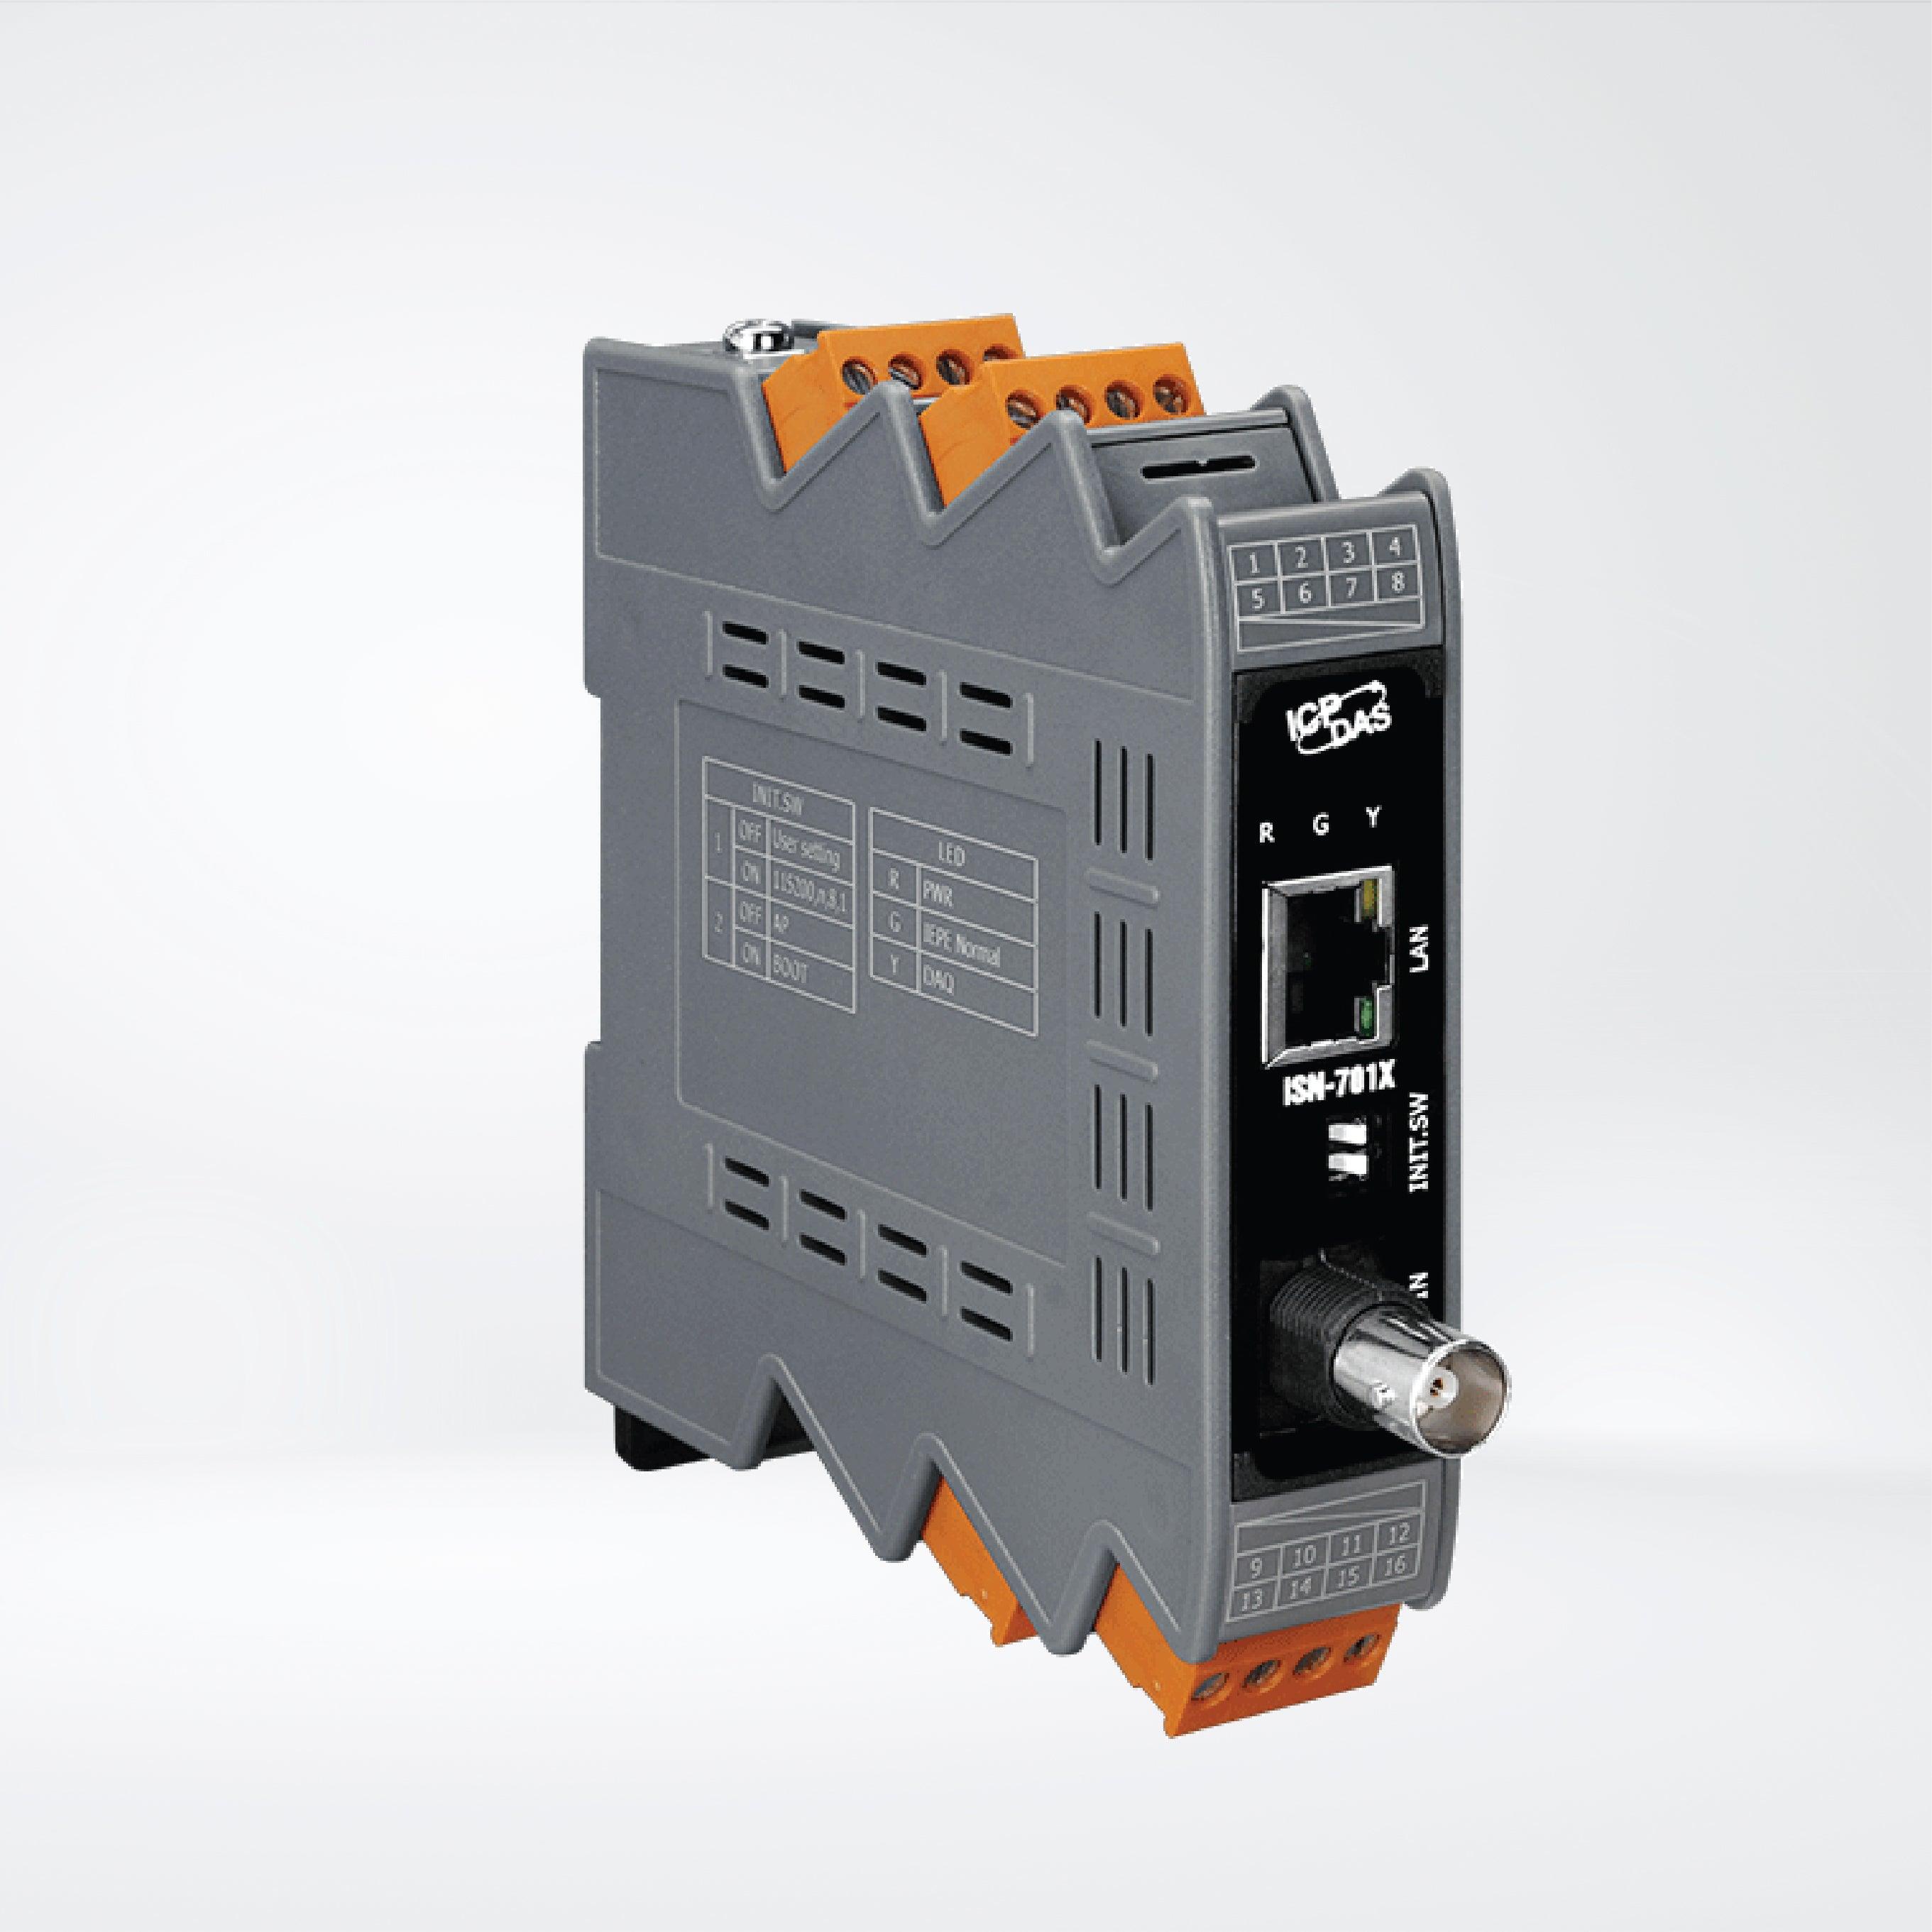 iSN-701X-mA Vibration signal to Current converter - Riverplus